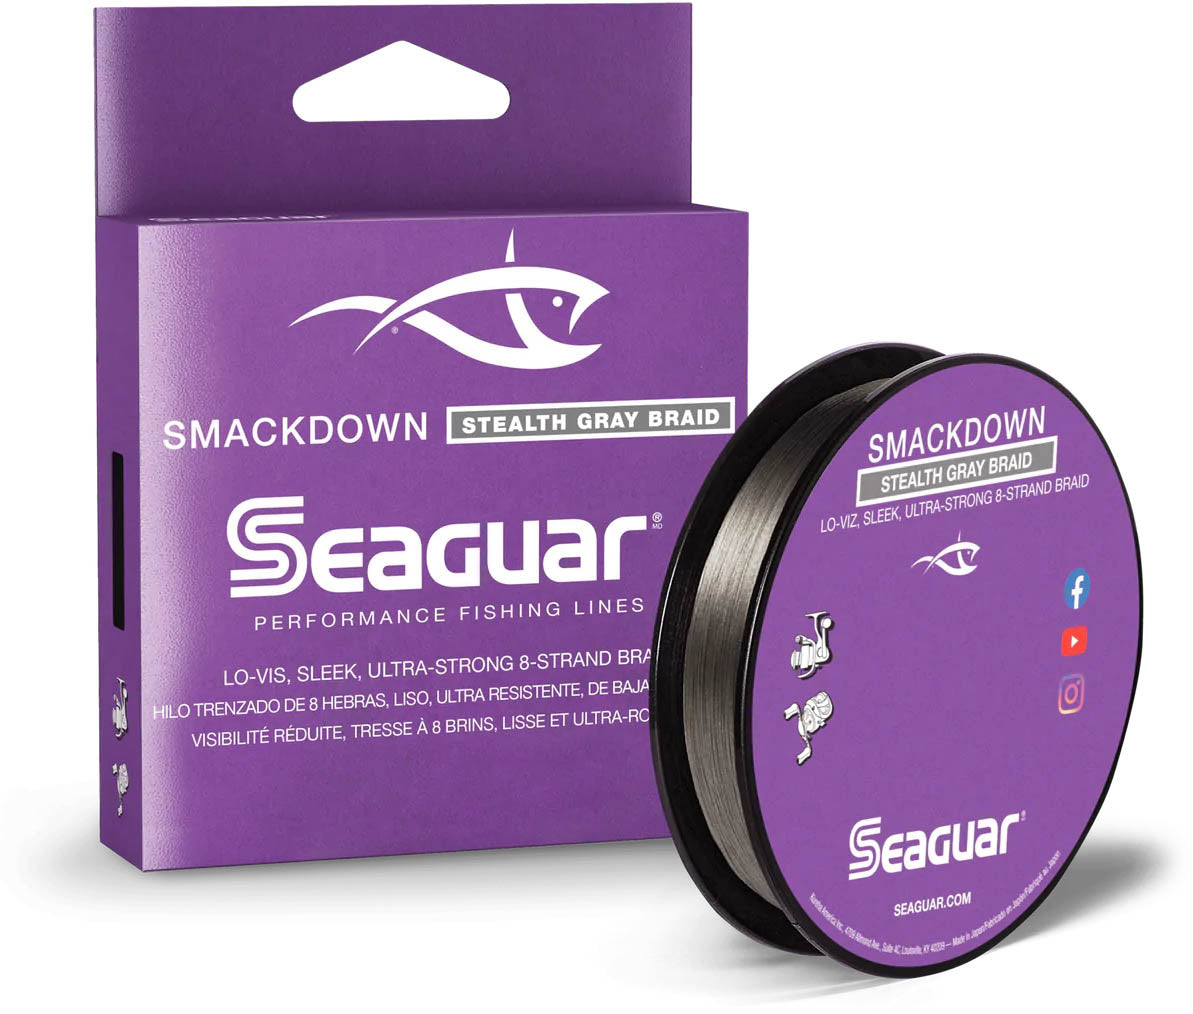 Seaguar Smackdown Stealth Gray Braid Fishing Line, 300 Yards, 40 lbs